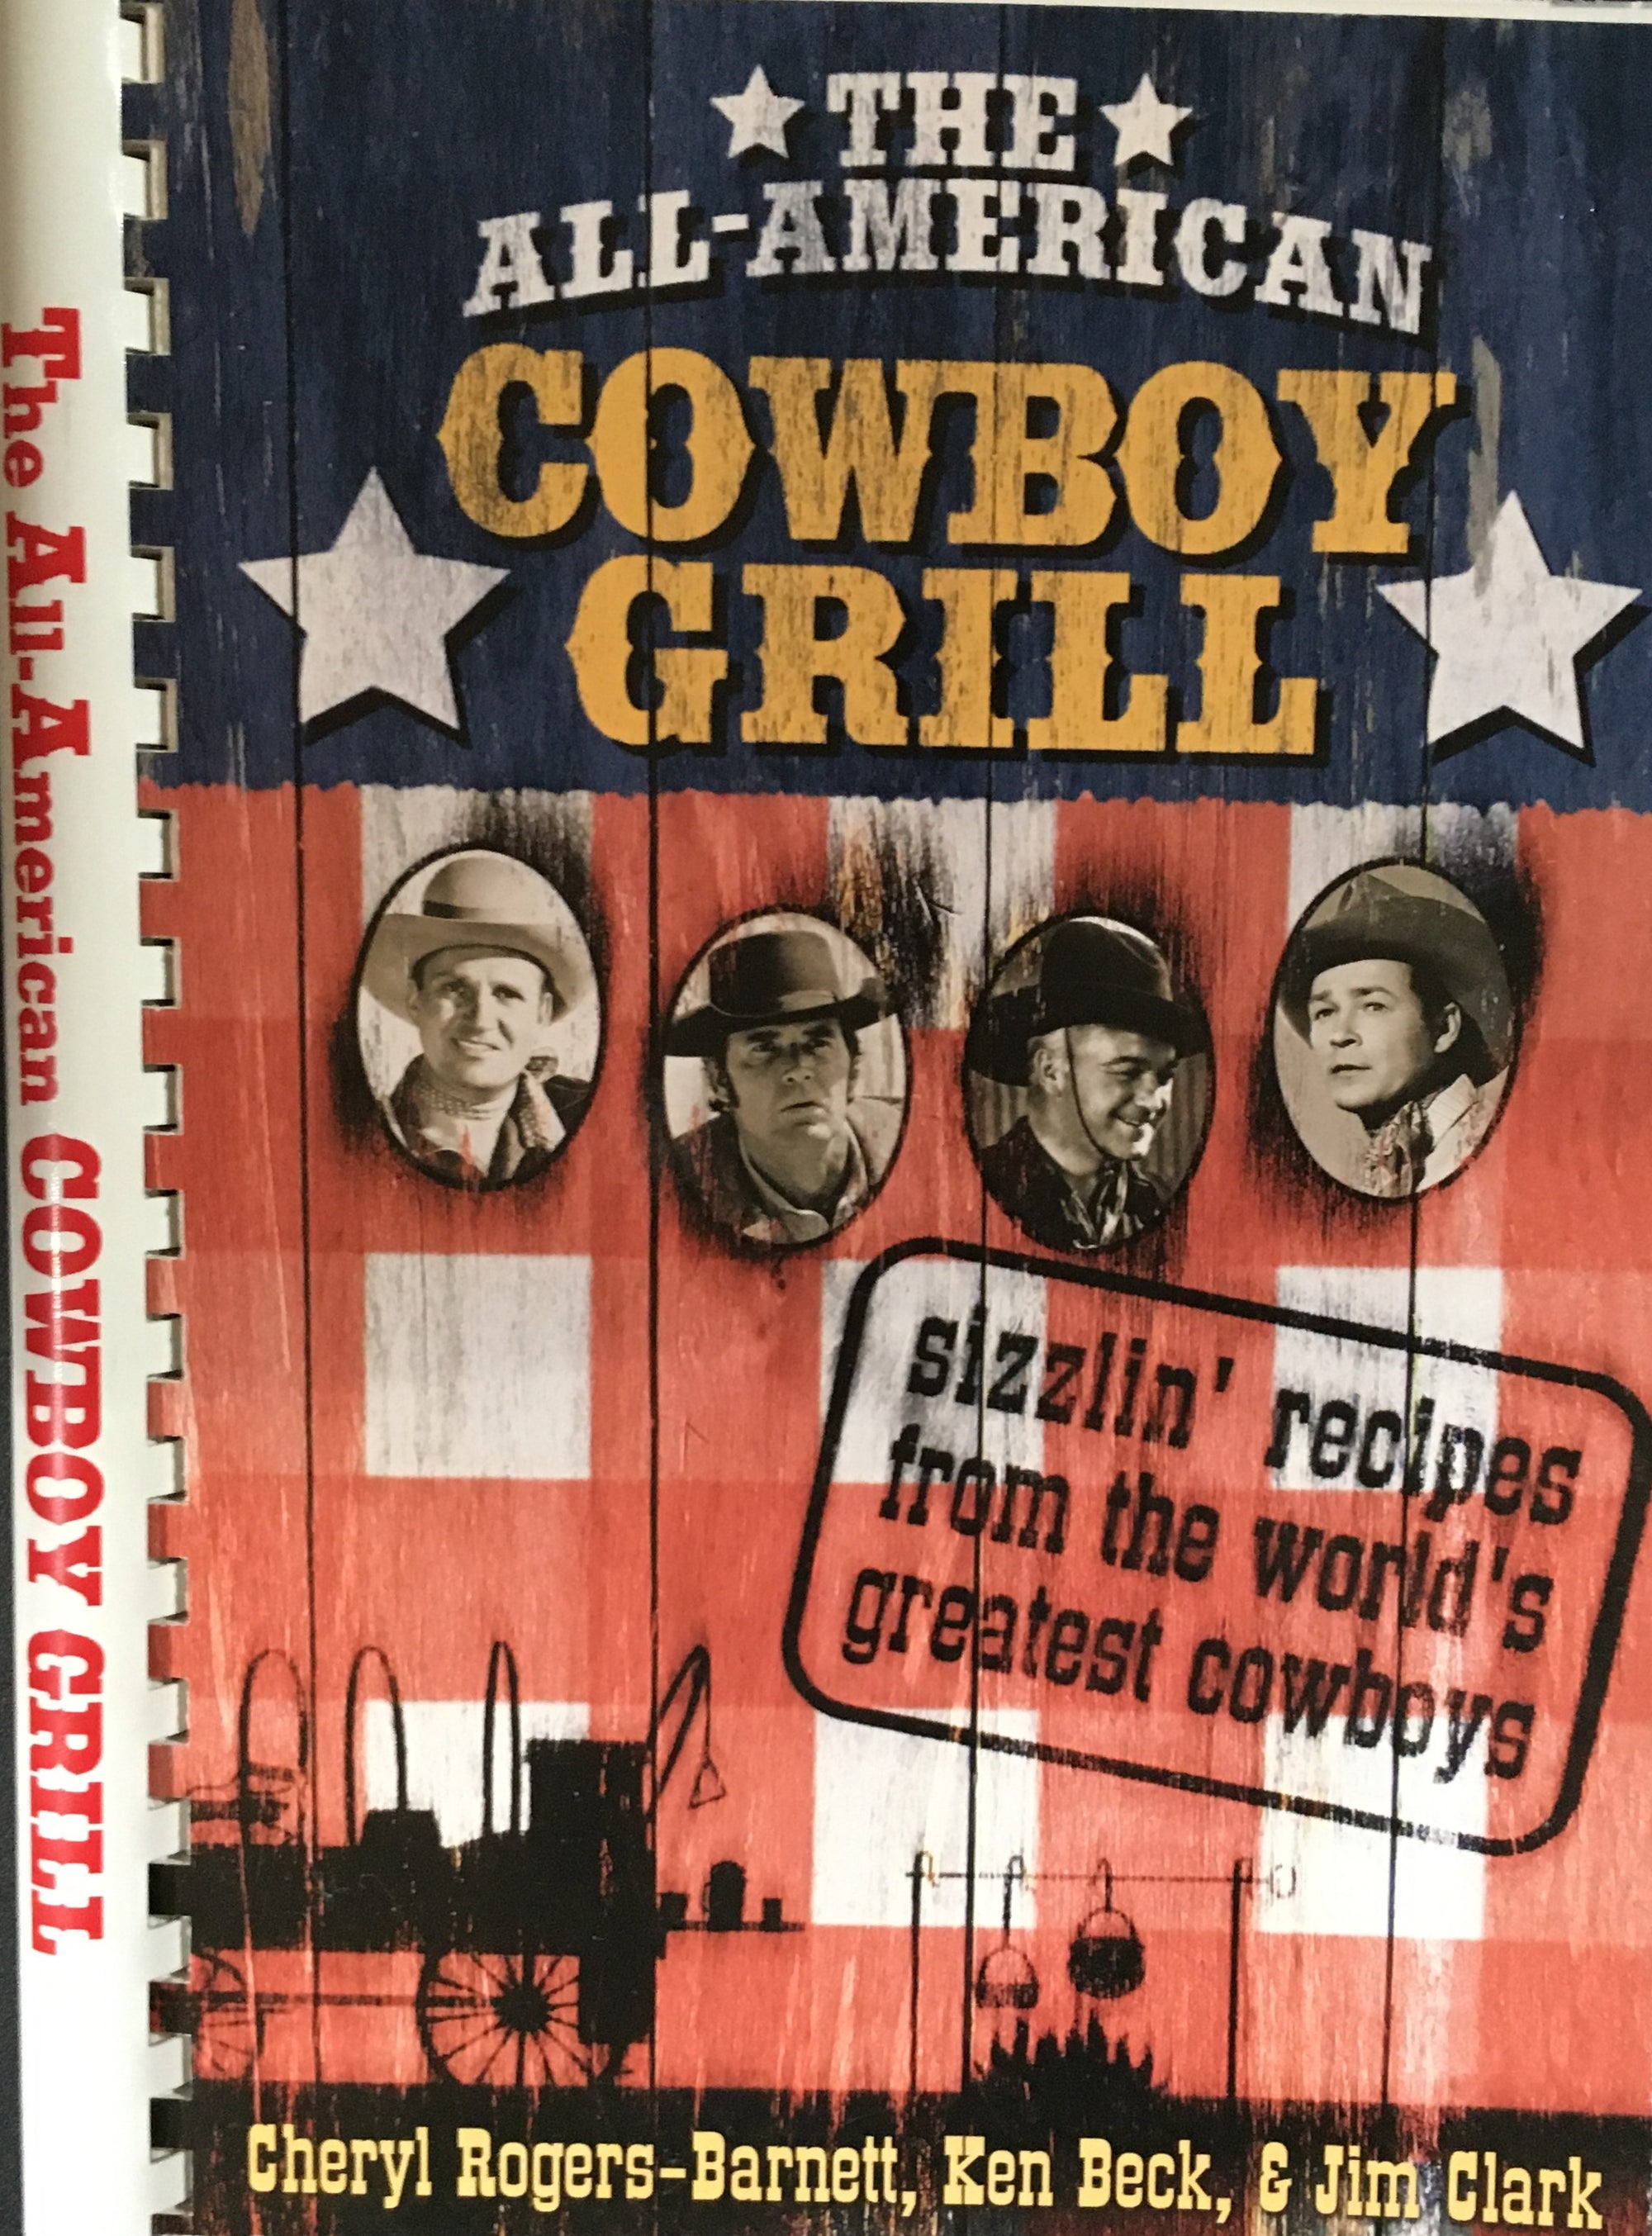 The All American Cowboy Grill Cookbook by Cheryl Rogers-Barnett